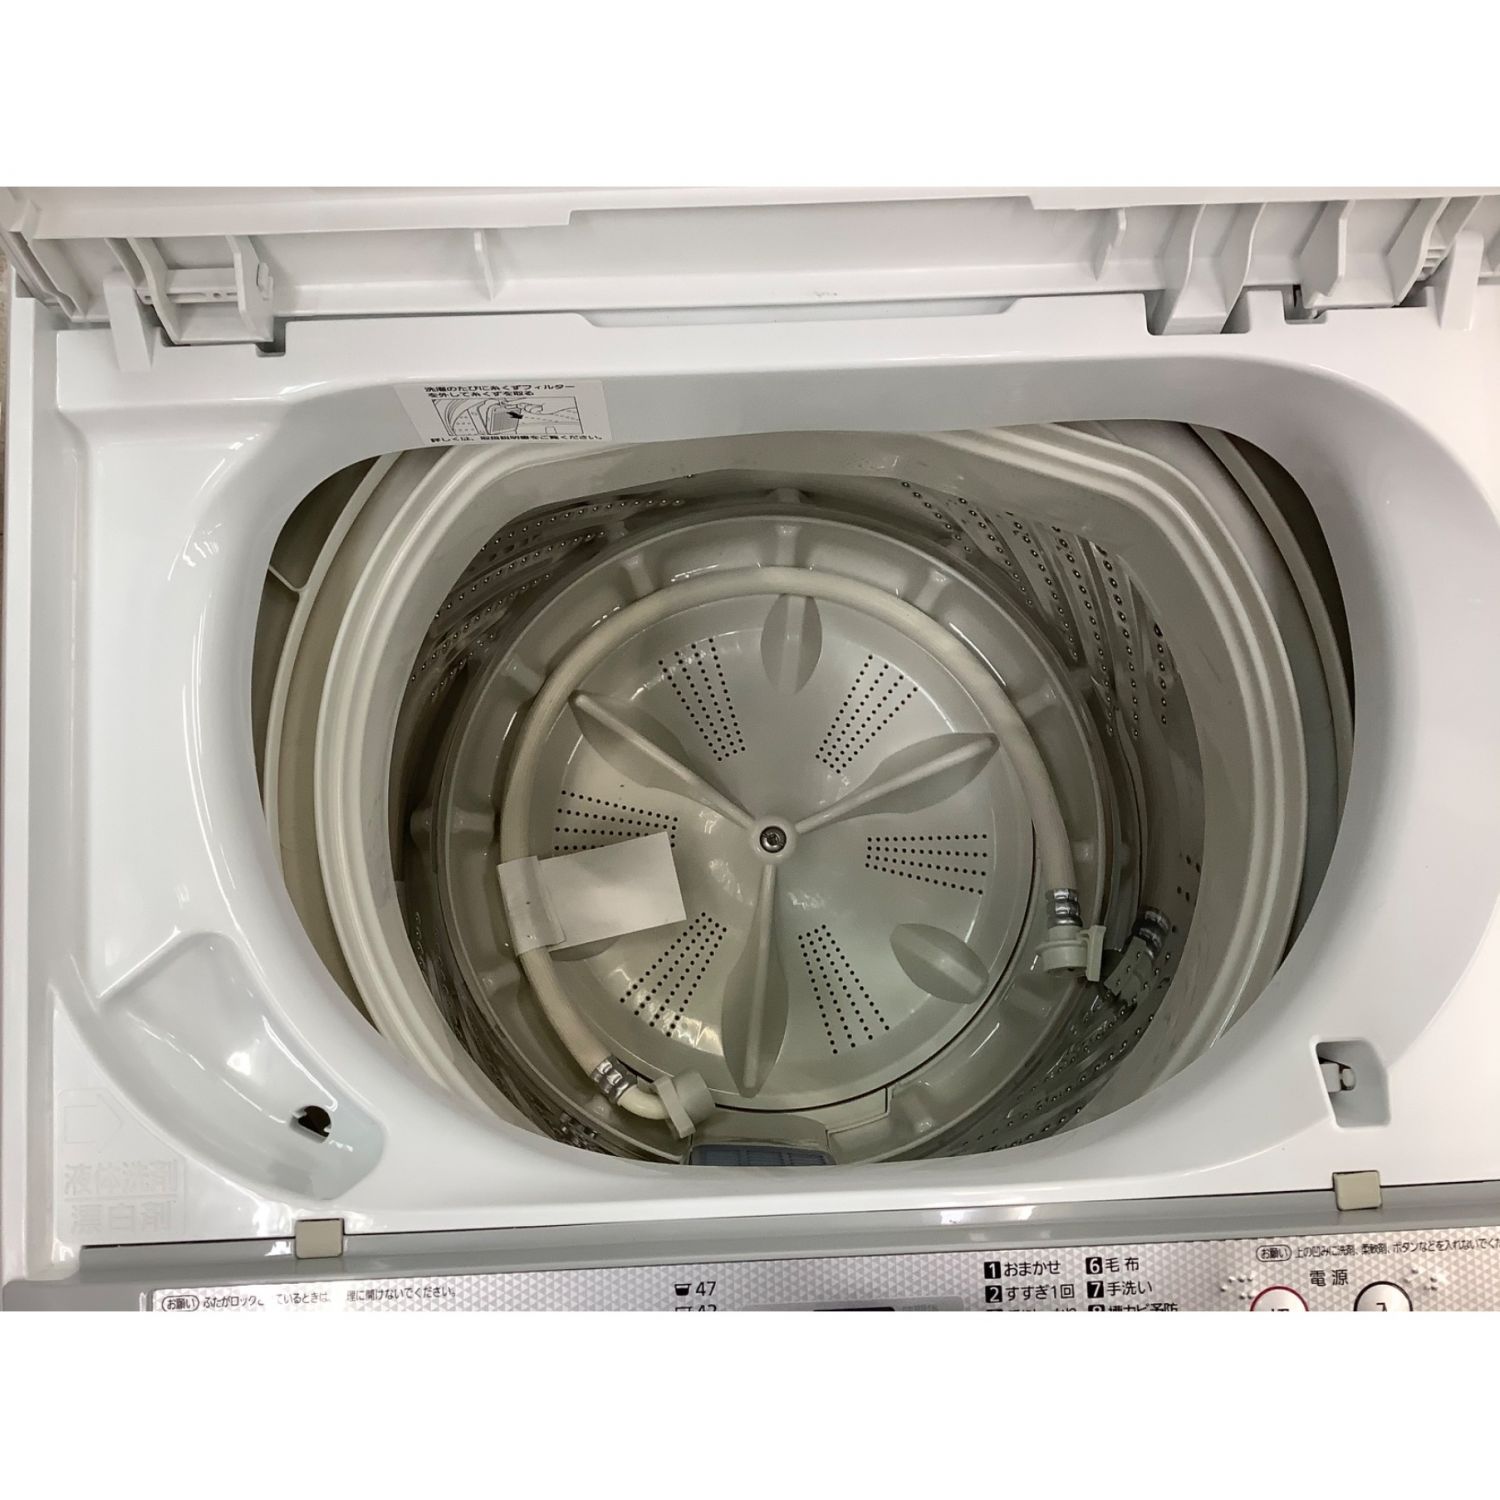 Panasonic (パナソニック) 2017年製 全自動洗濯機 5.0kg NA-F50B10 